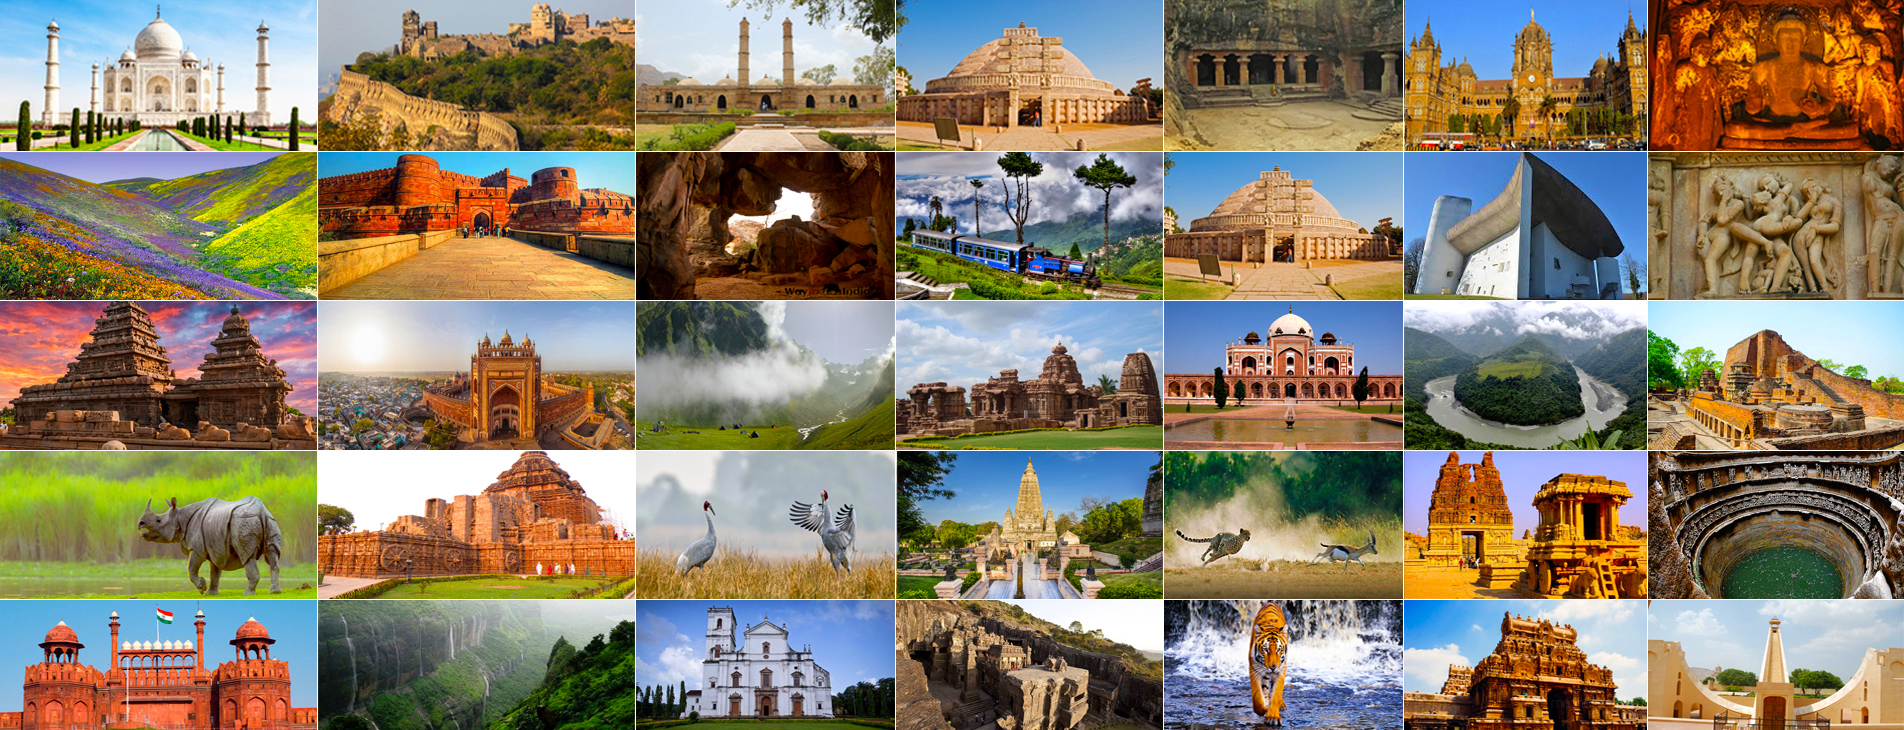 List of 38 UNESCO World Heritage Sites in India